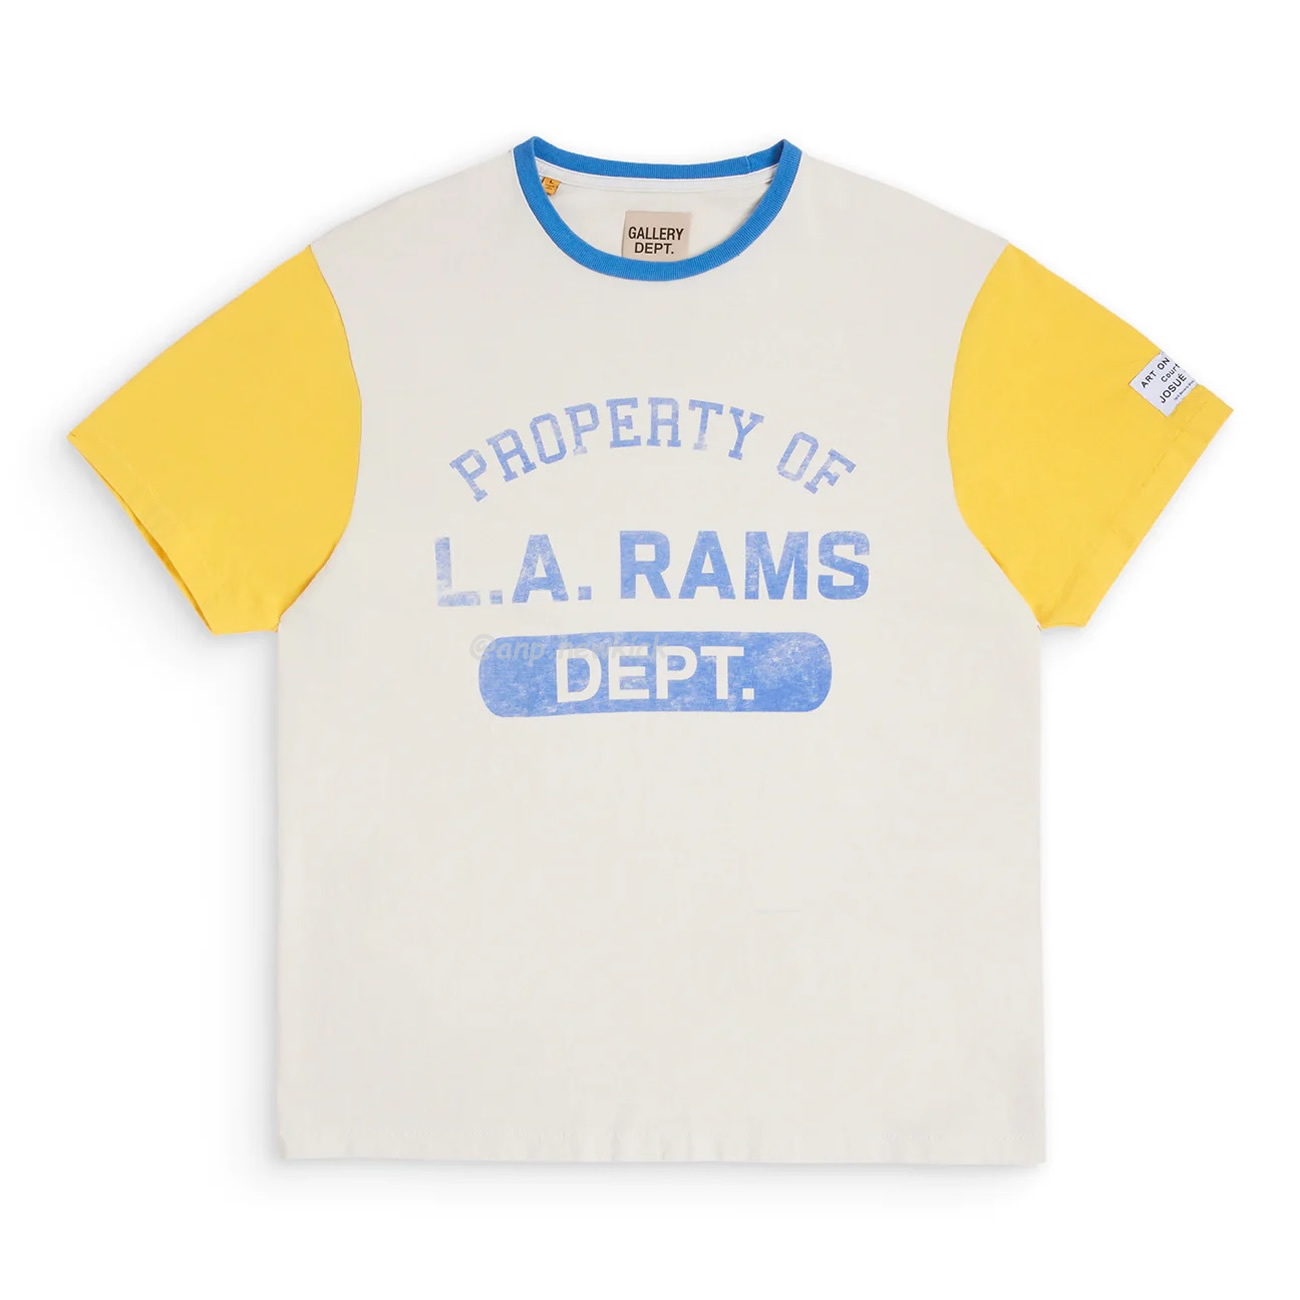 Gallery dept x LA Rams Color Block Tee Rams Co branded Old Print Contrast Short Sleeve T-shirt